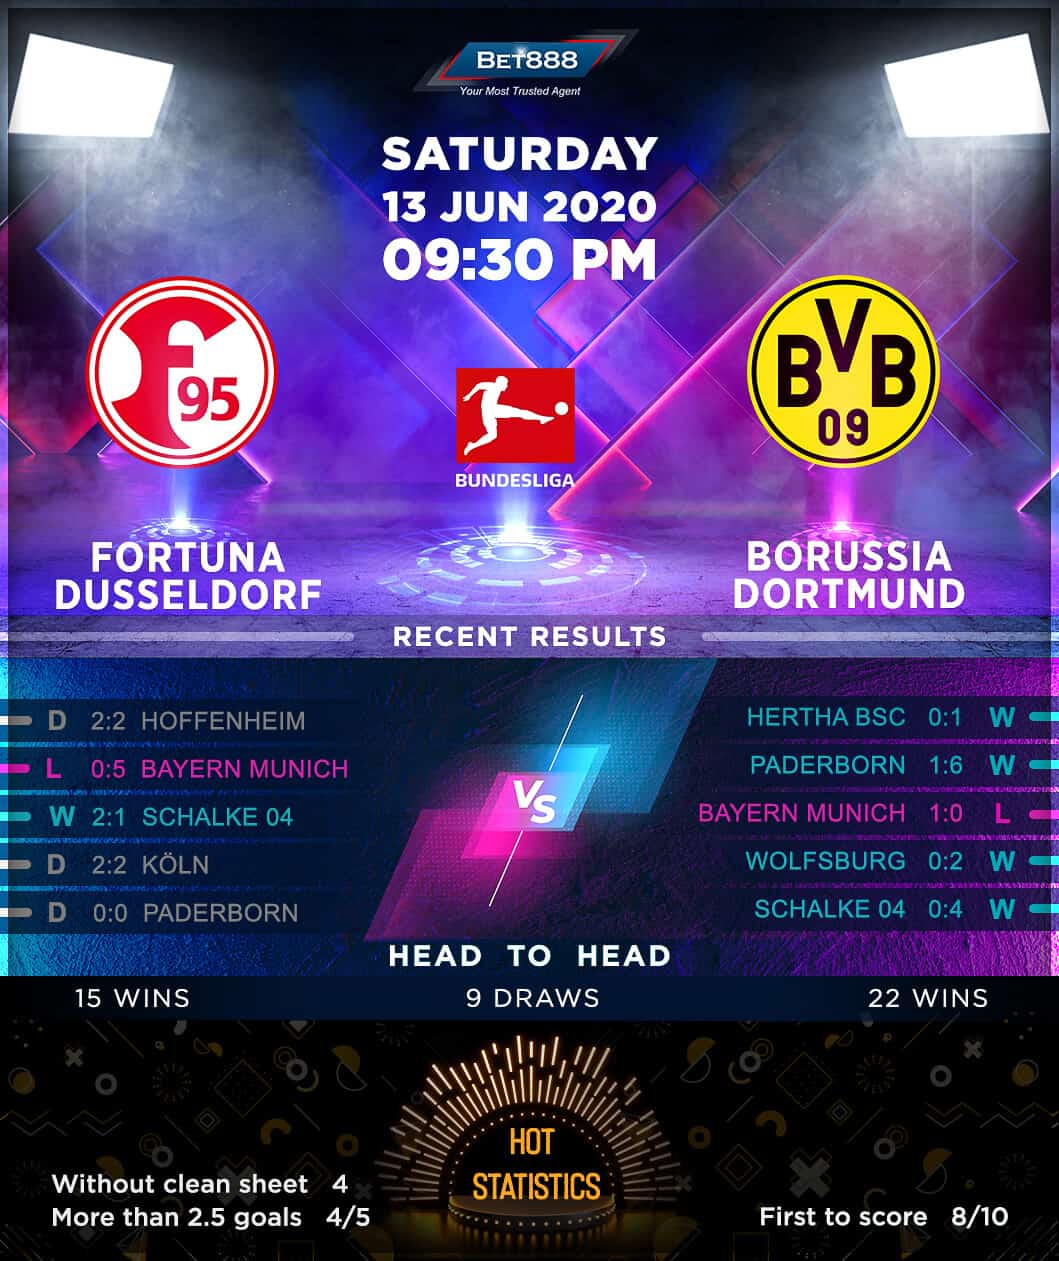 Fortuna Dusseldorf vs Borussia Dortmund 13/06/20